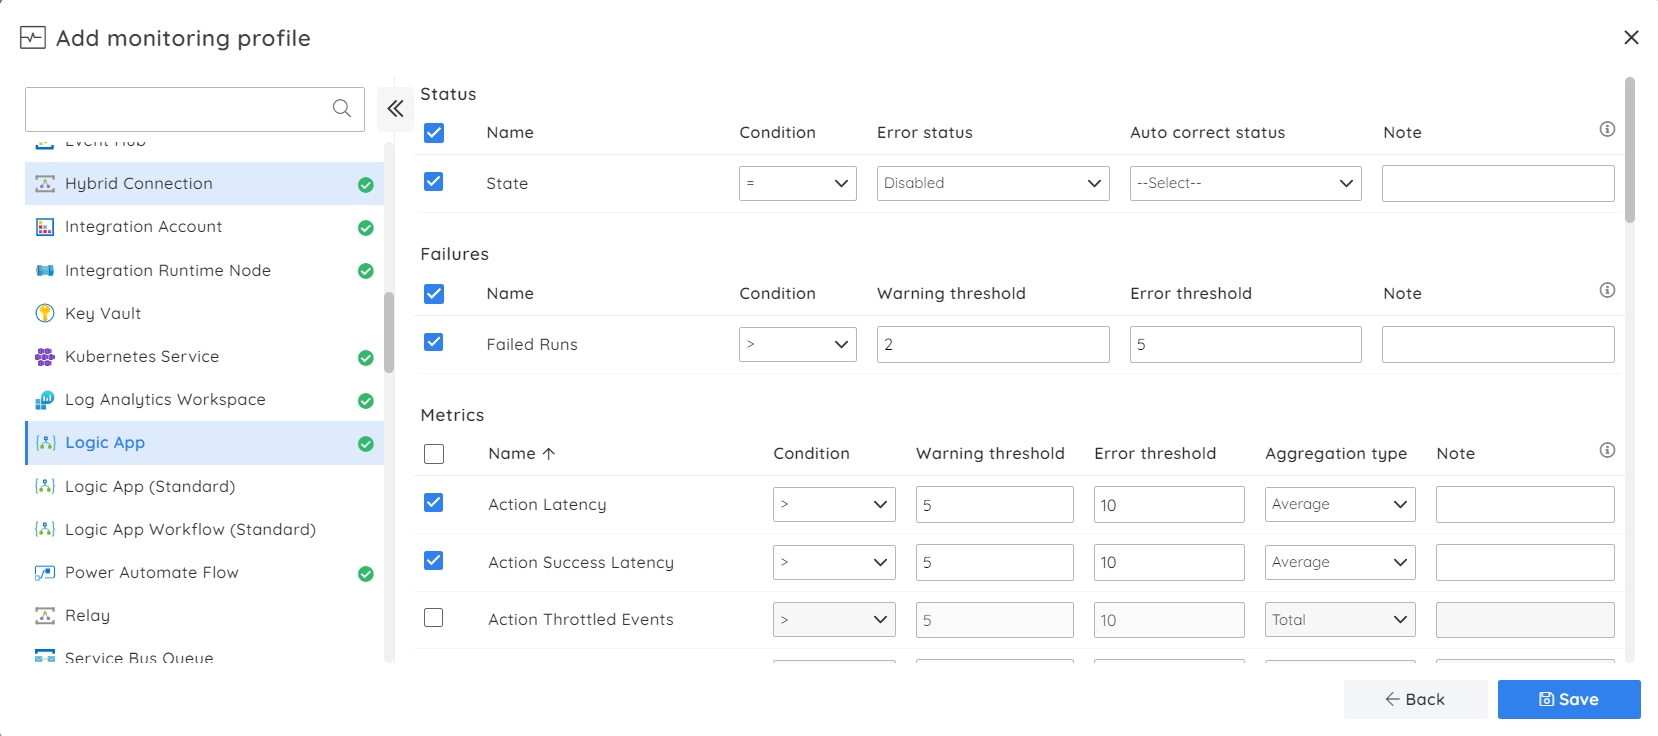 Creating Azure Logic App monitoring profile in Turbo360